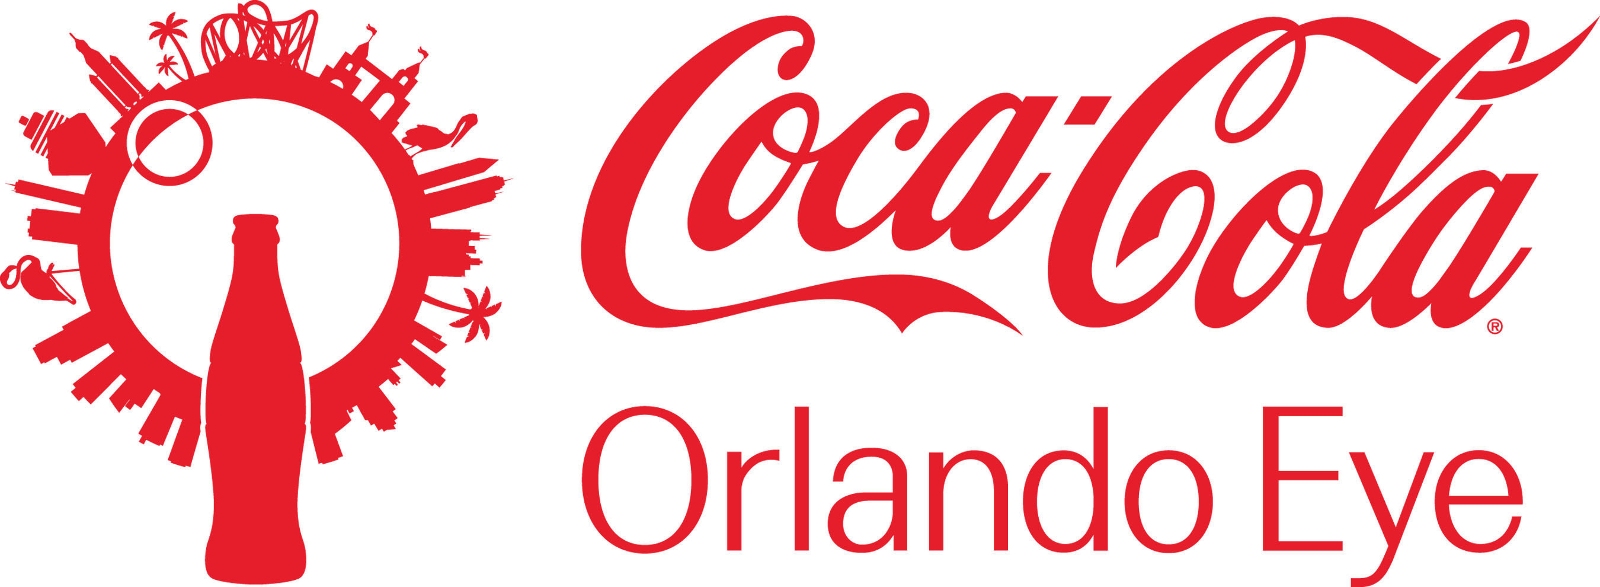 I-Drive 360 Welcomes the new Coca-Cola Orlando Eye 